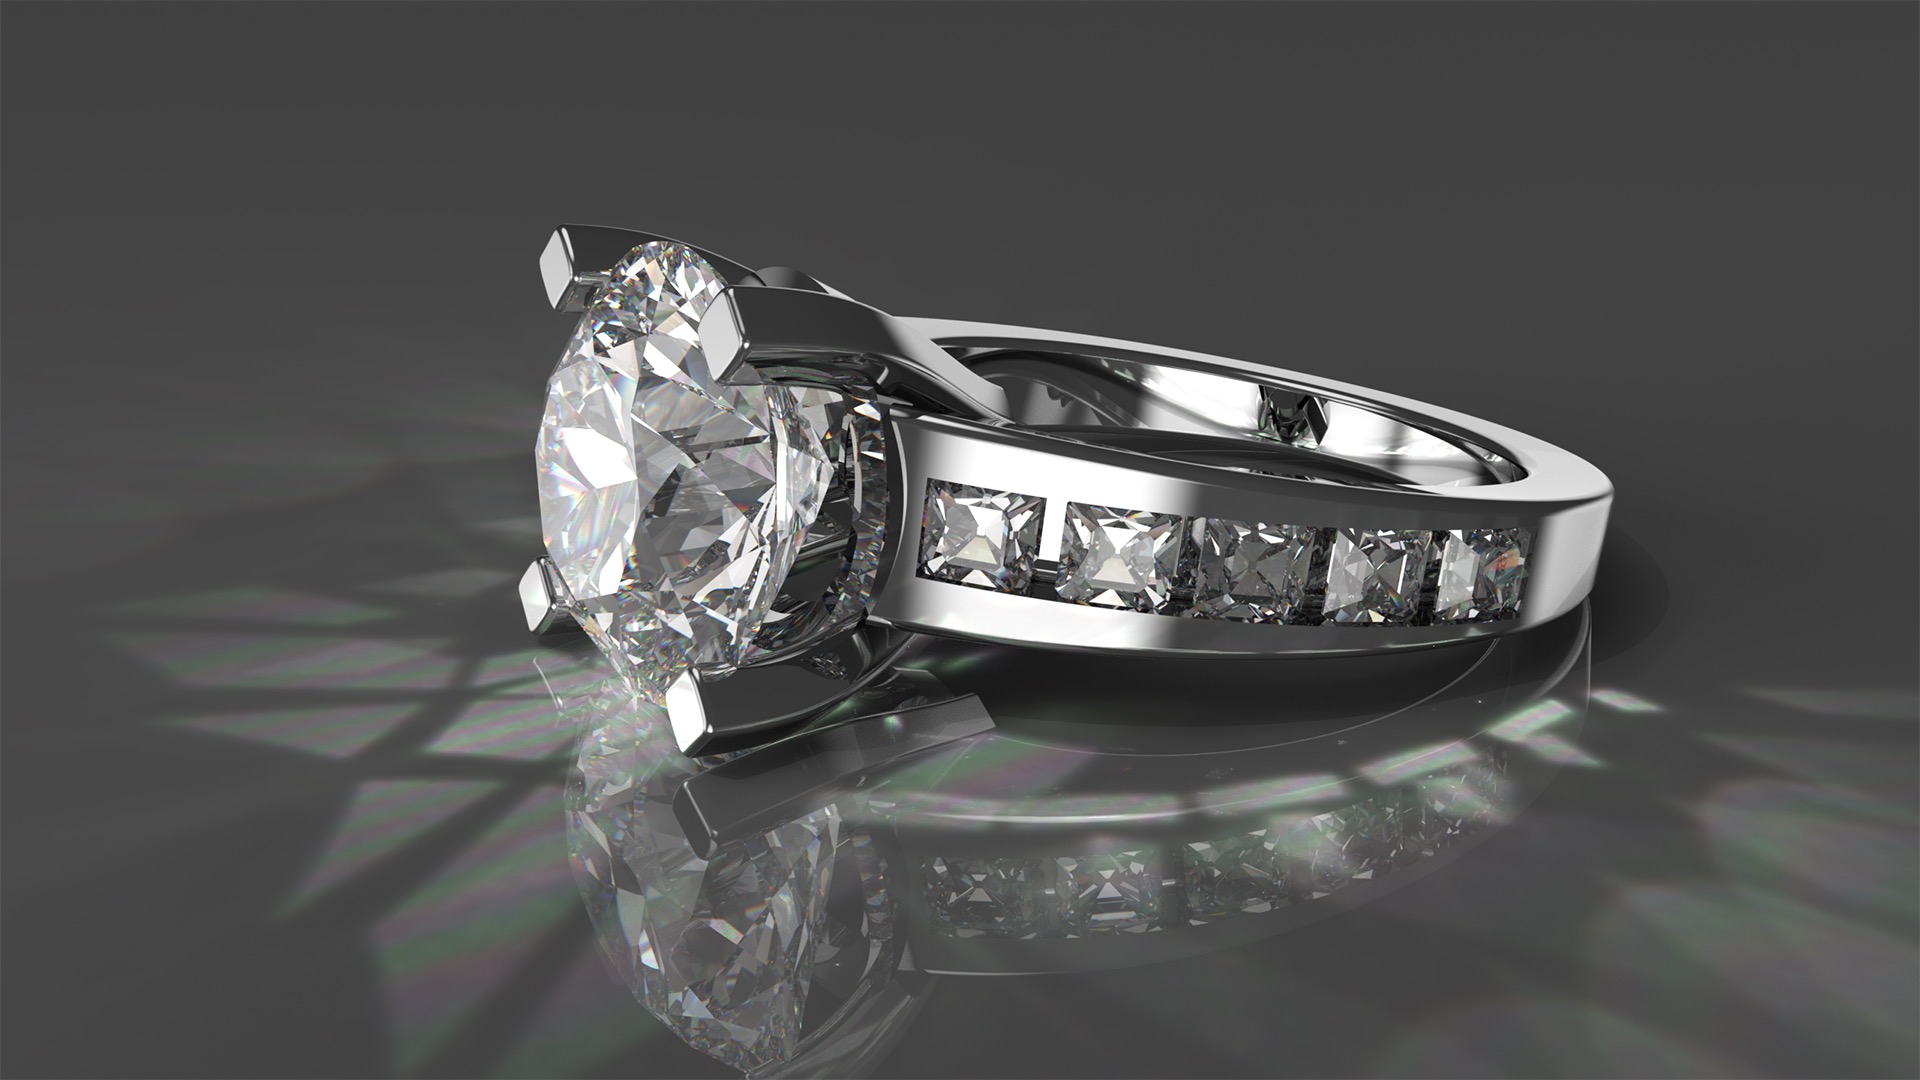 01-diamond_ring_jewelry_caustics